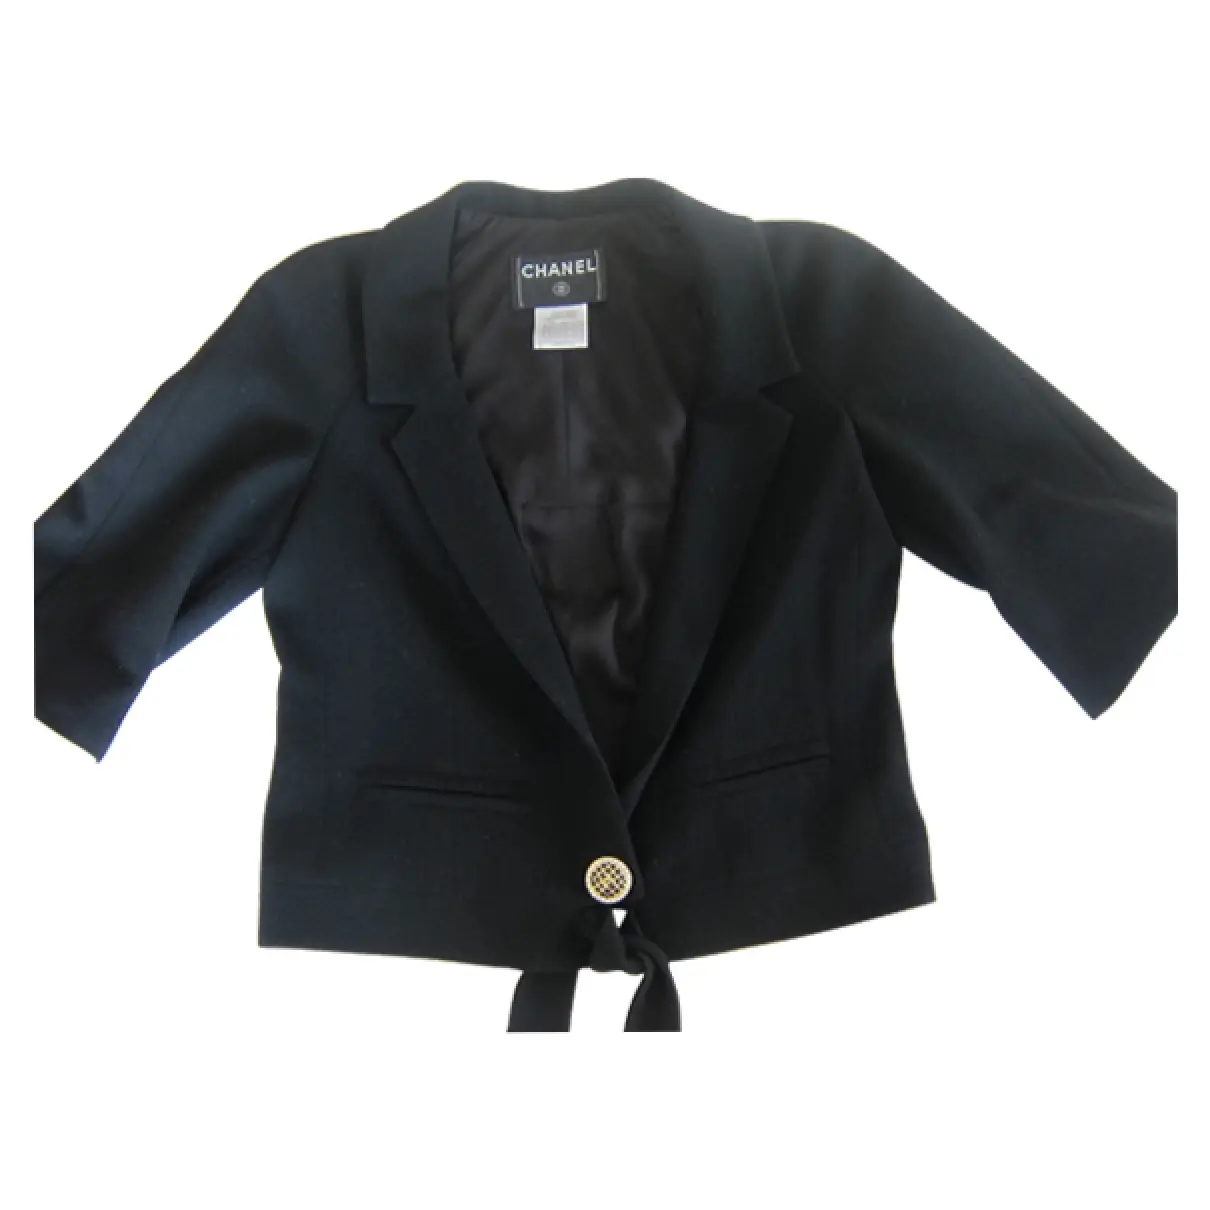 Buy Chanel Black Wool Jacket online